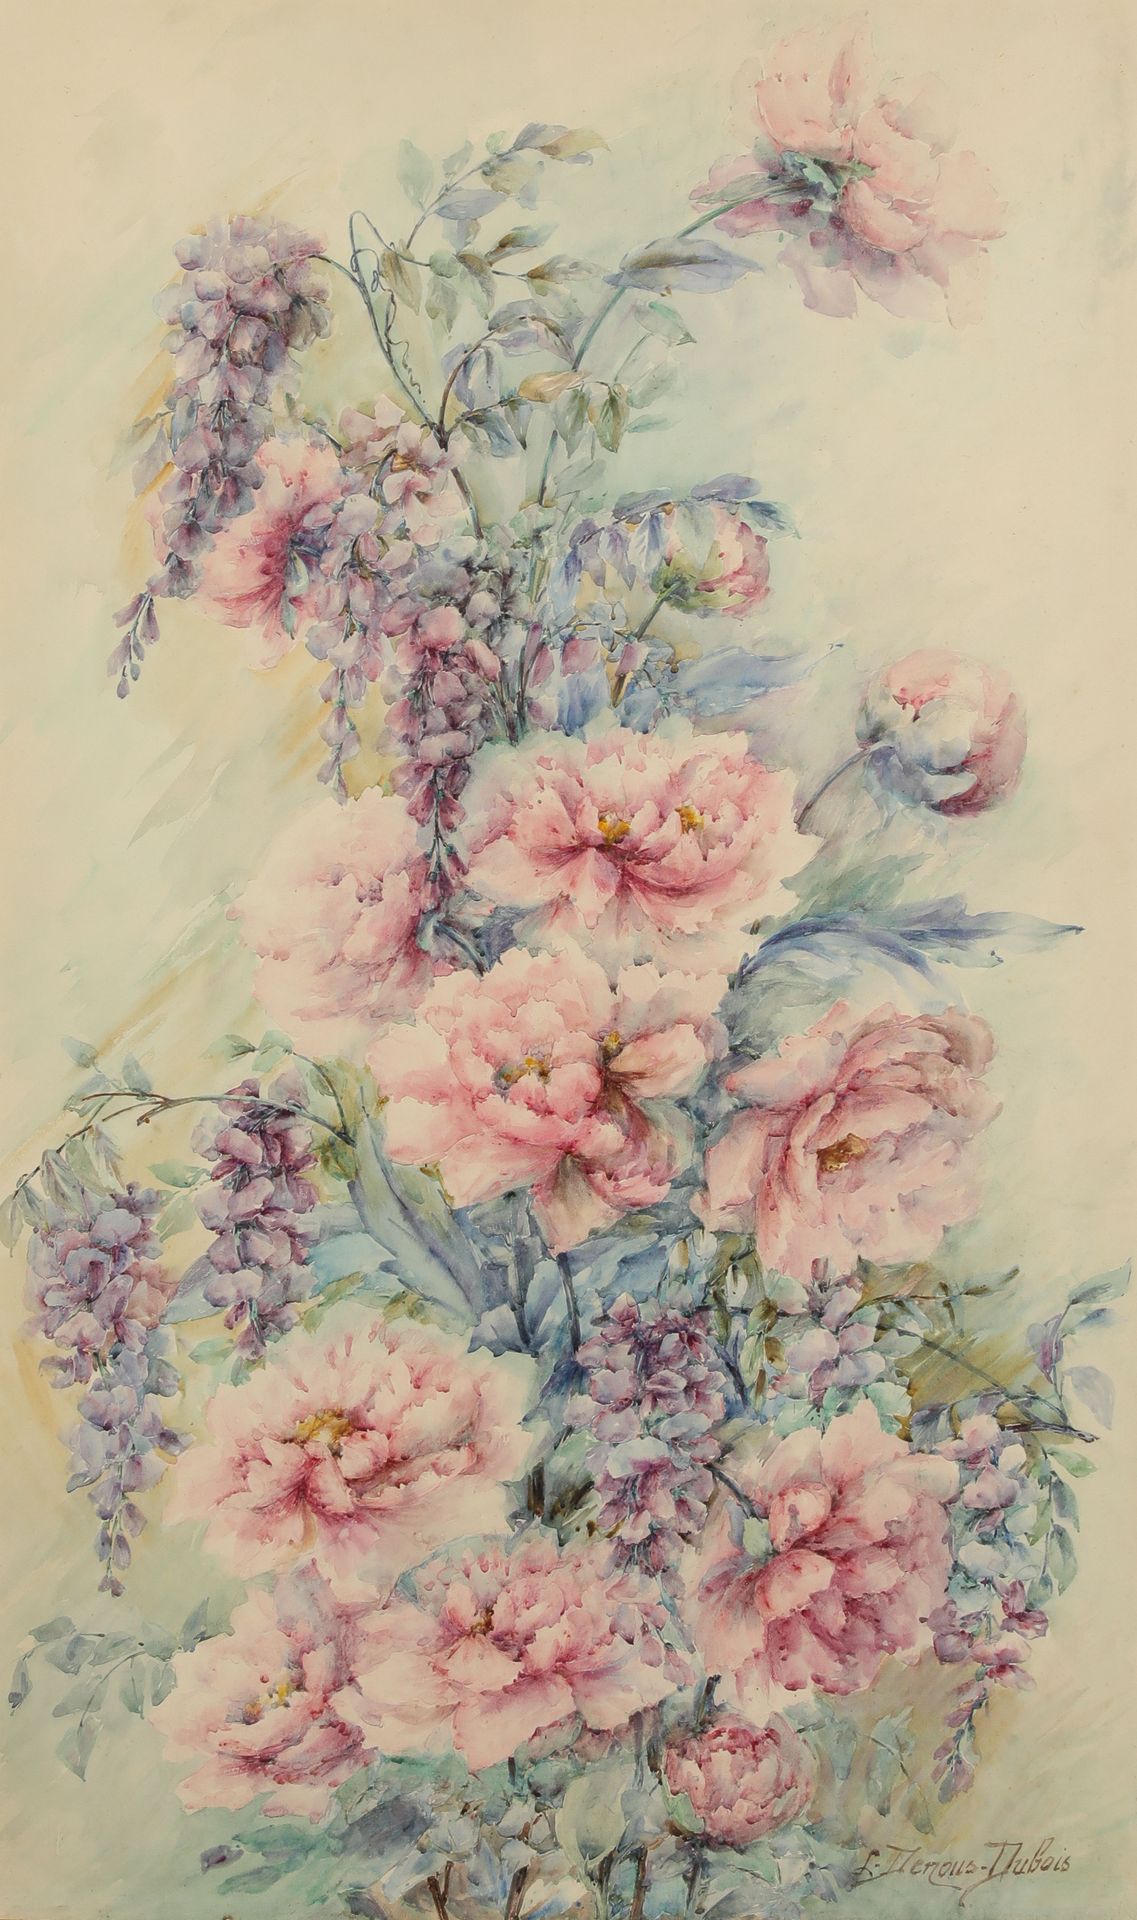 Null Louise DENOUS DUBOIS (20世纪)
甘蔗和牡丹
纸上水彩画，右下角签名
100 x 60 cm at sight